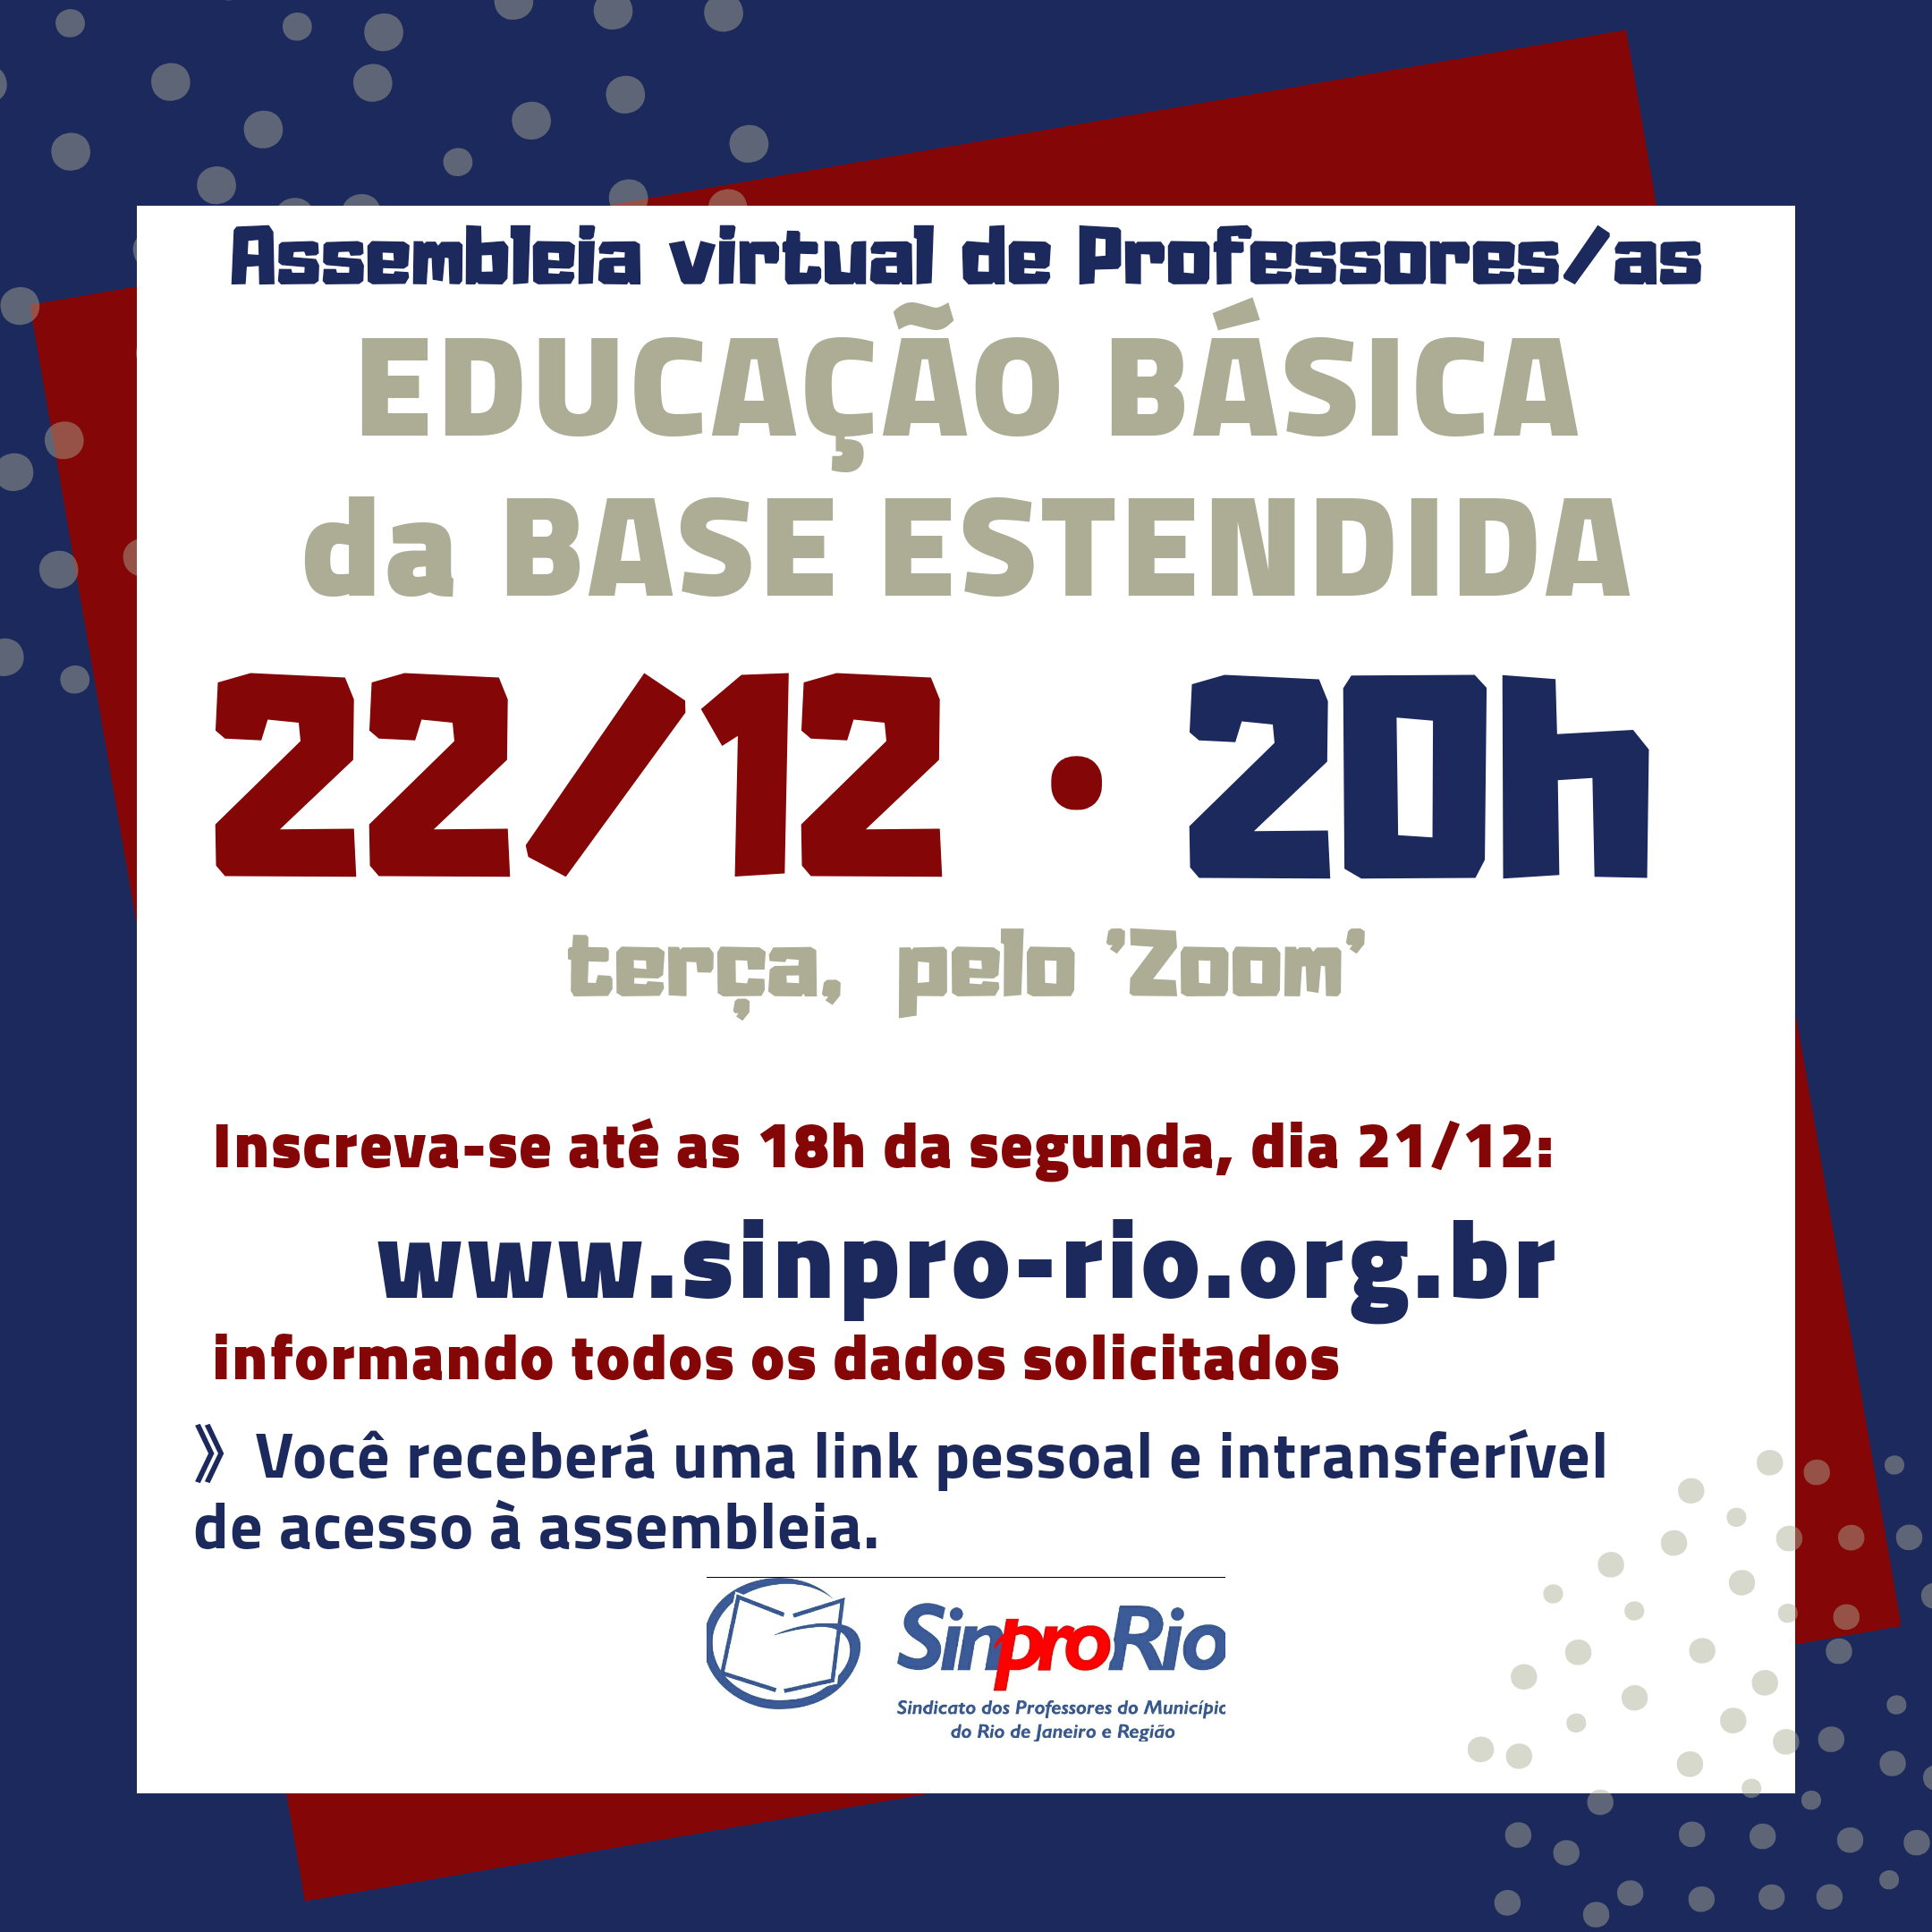 Ed. Básica- Base Estendida: assembleia 22/12, 20h. Participe!